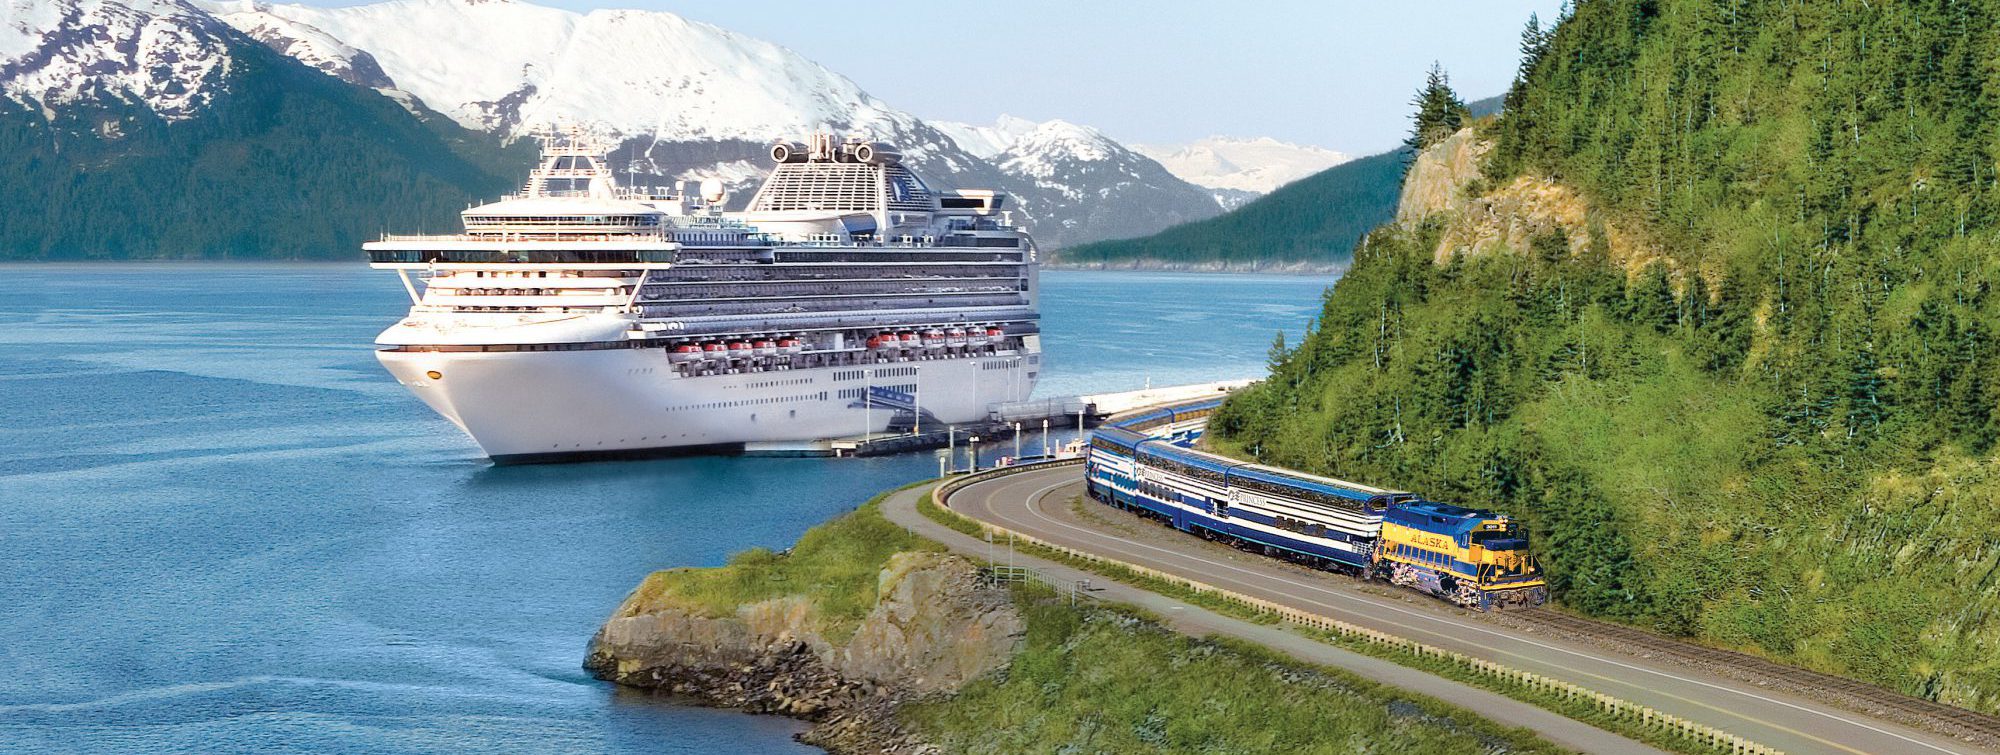 alaska cruise train tours